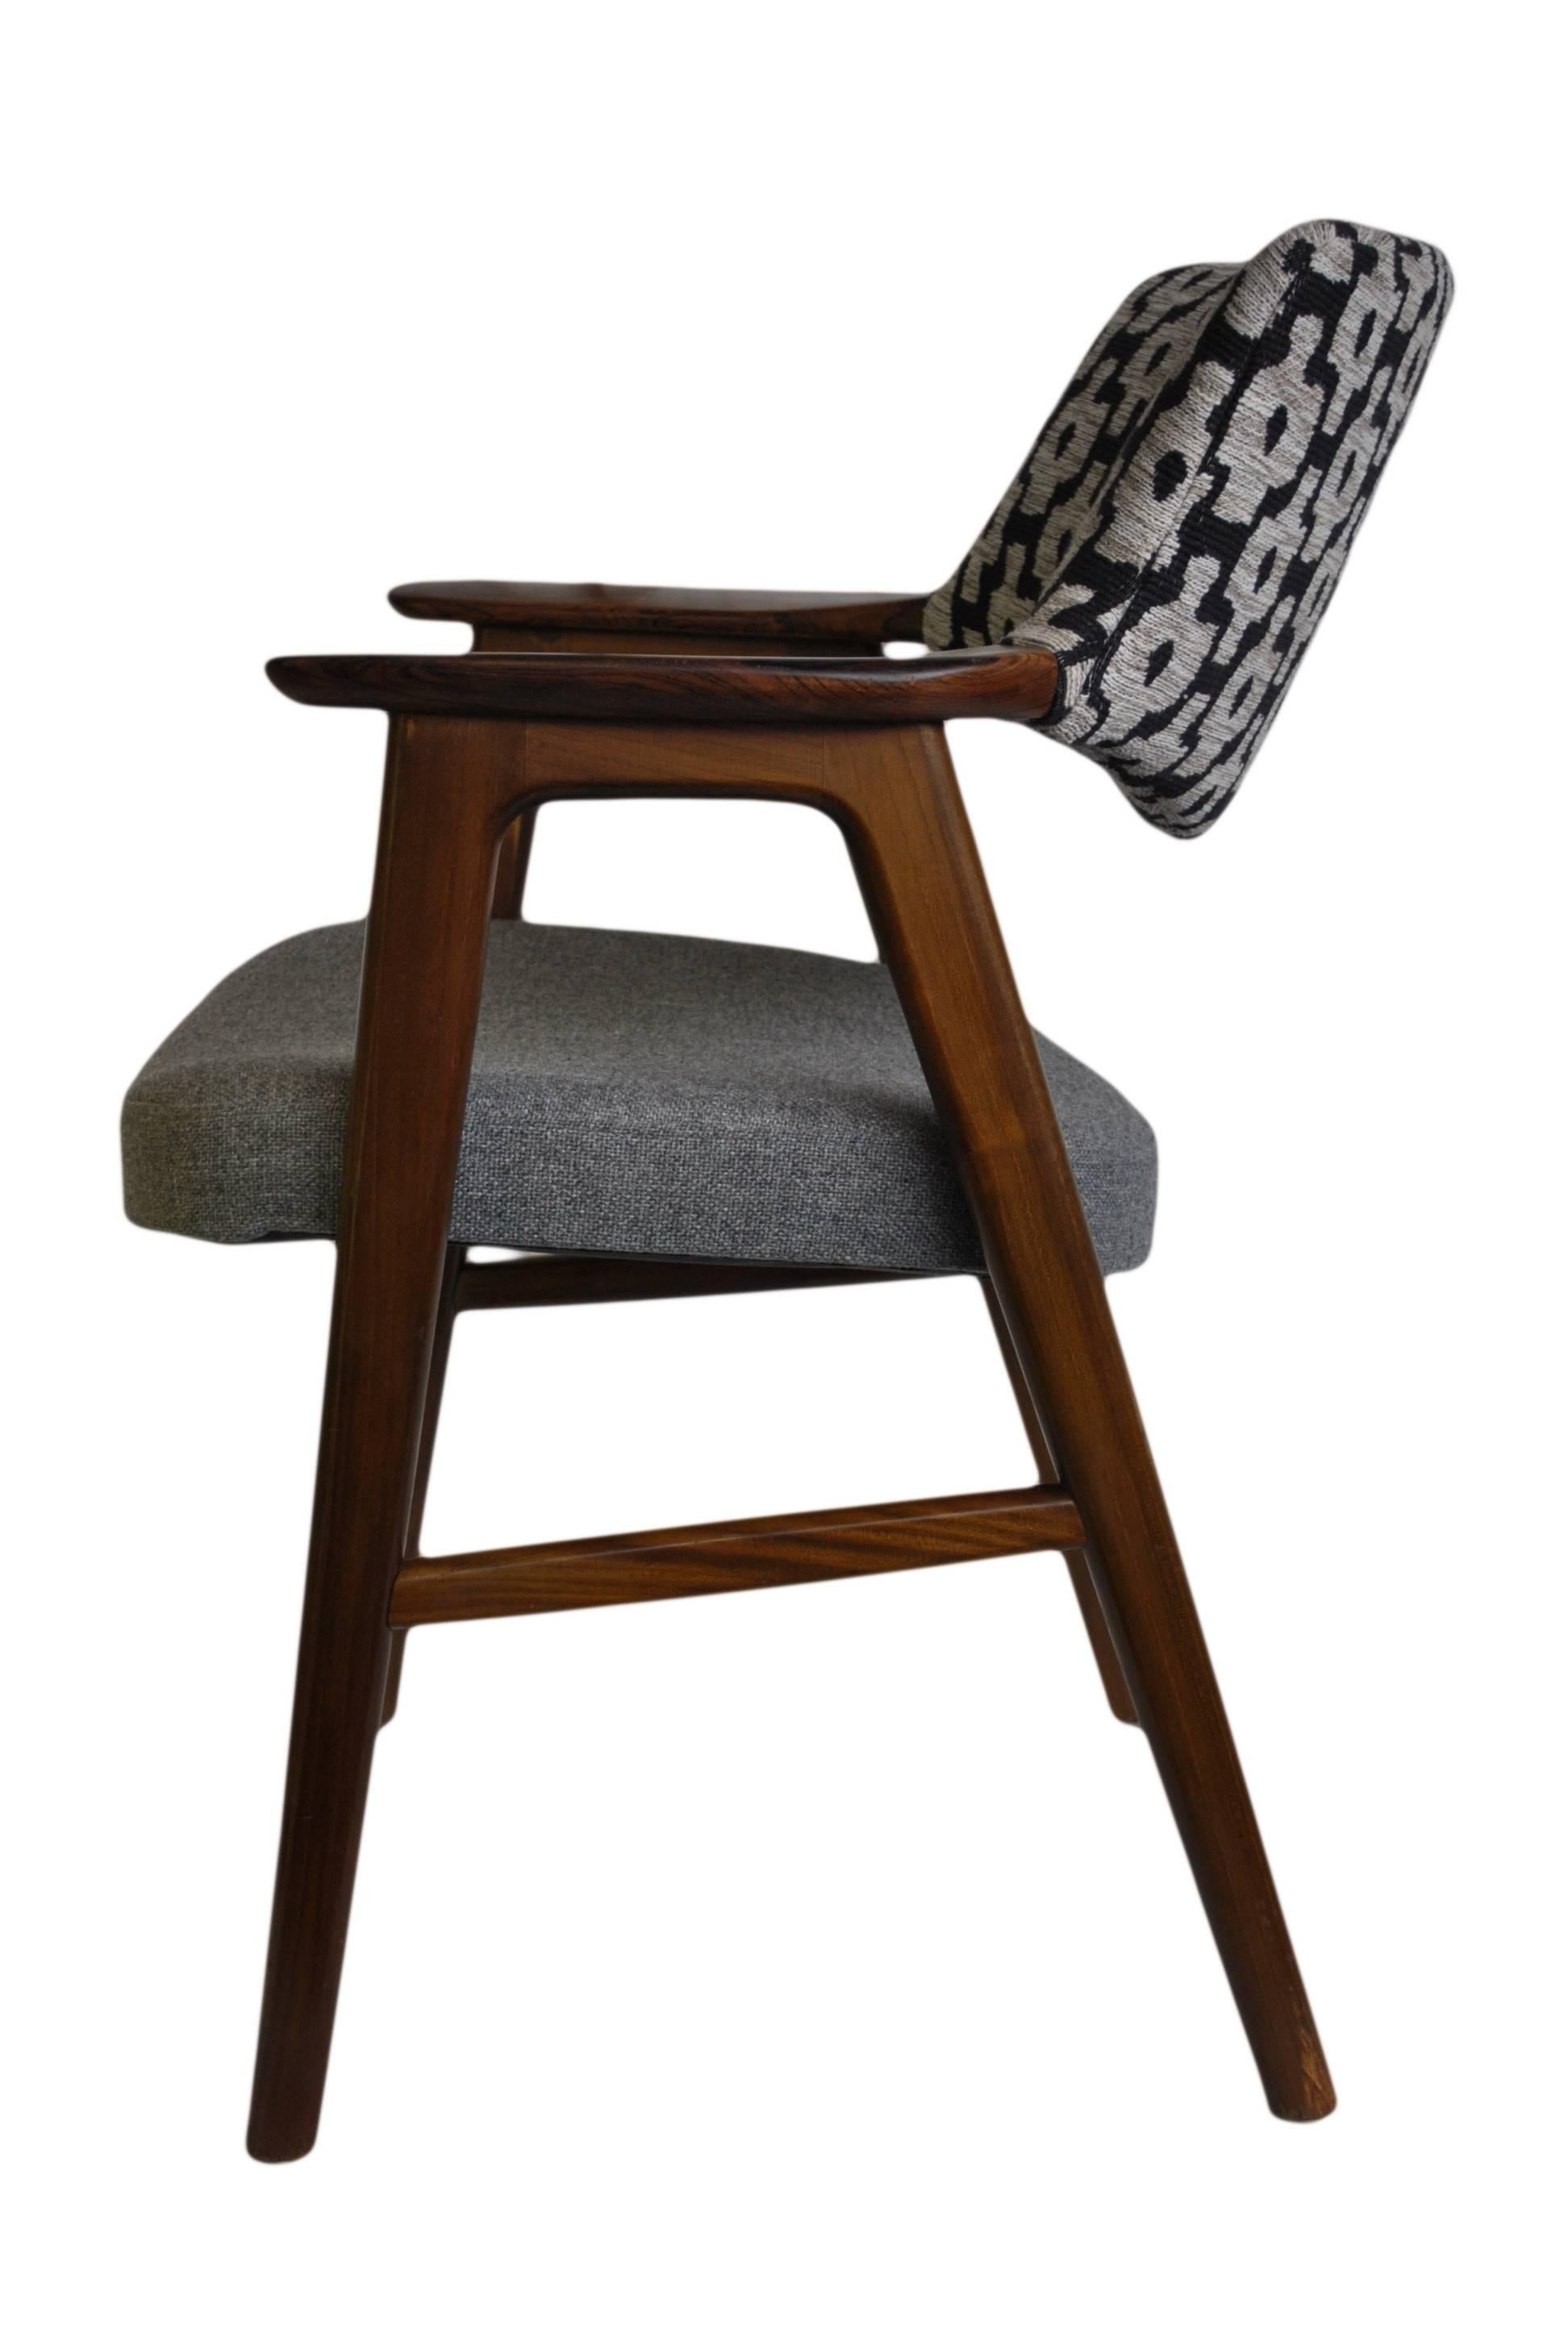 20th Century Erik Kirkegaard Chair, Refurbished and reupholstered.